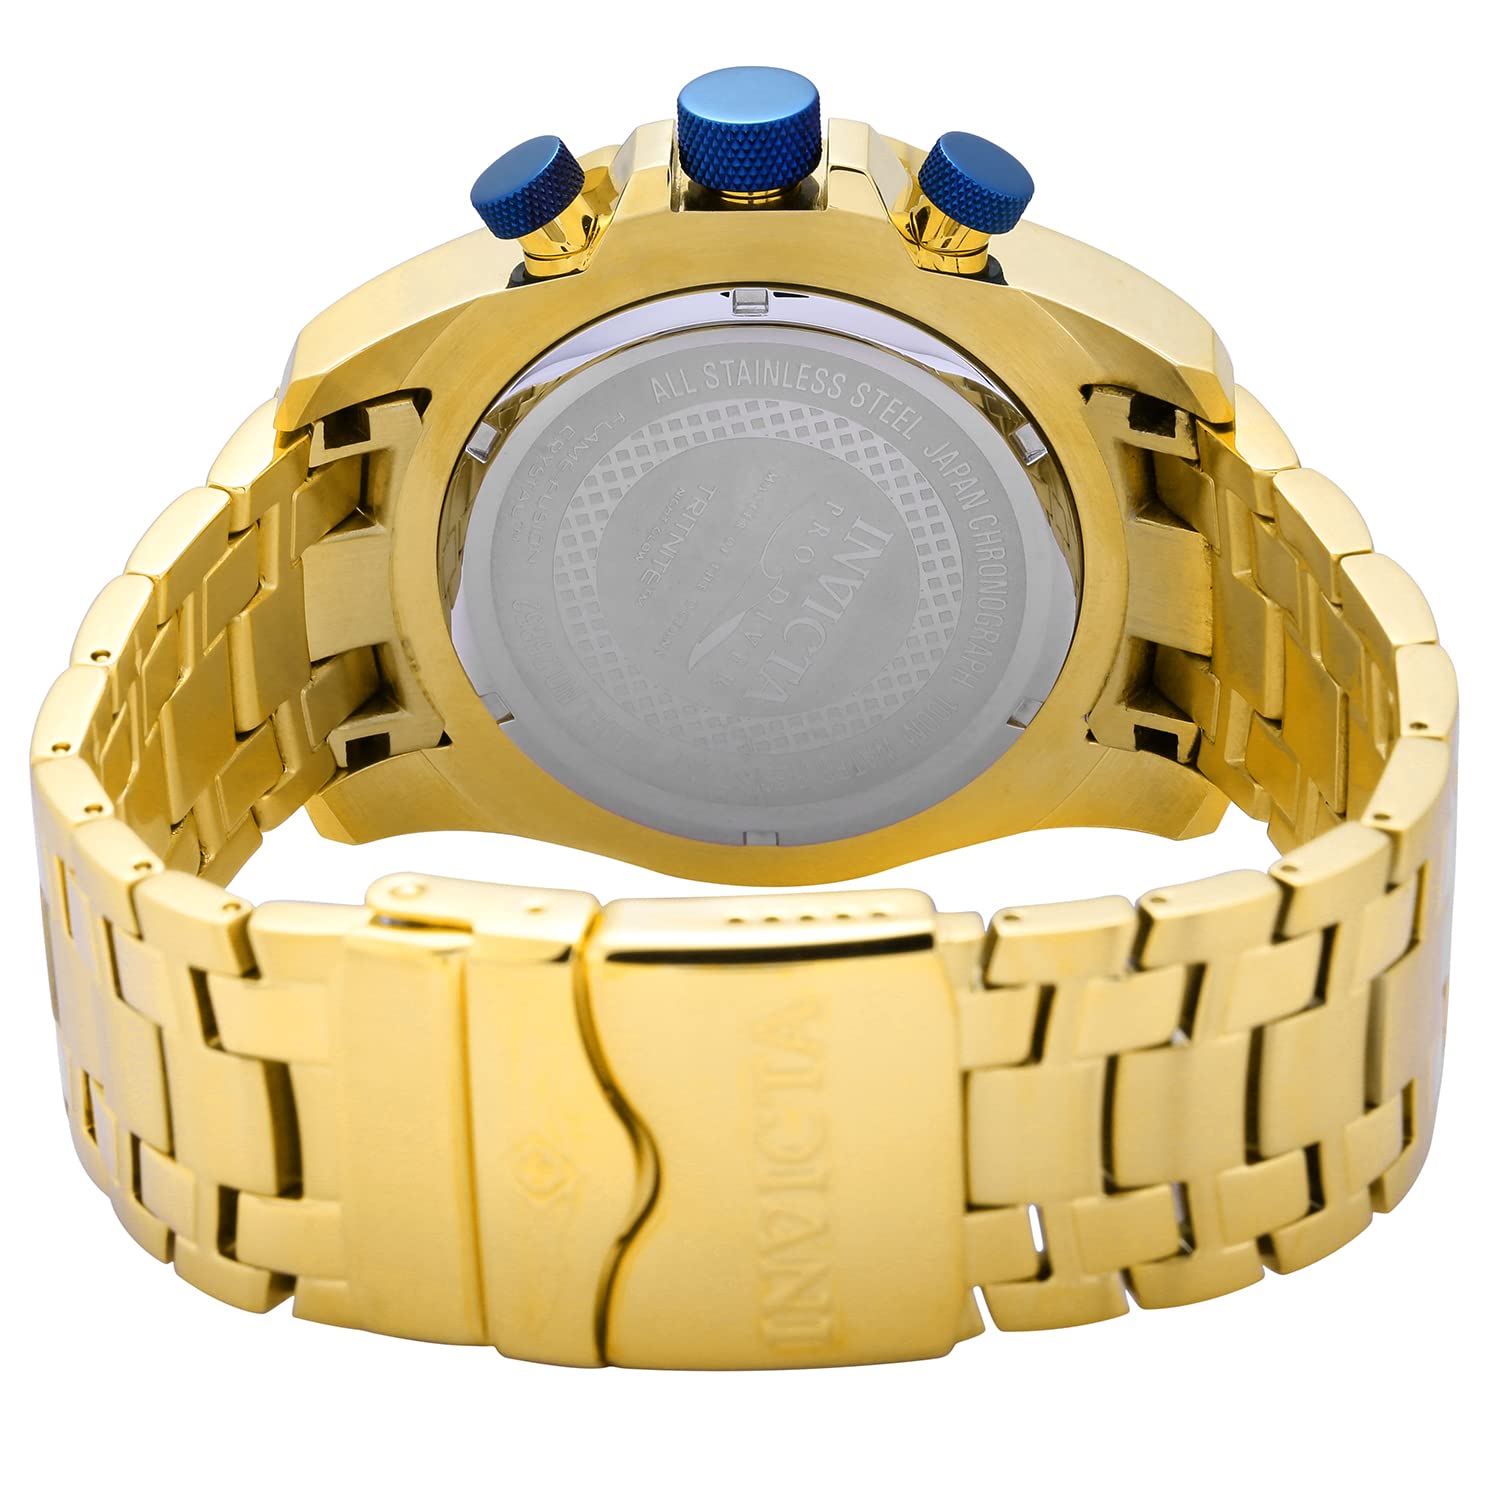 Invicta Men's 25852 Pro Diver Analog Display Quartz Gold Watch